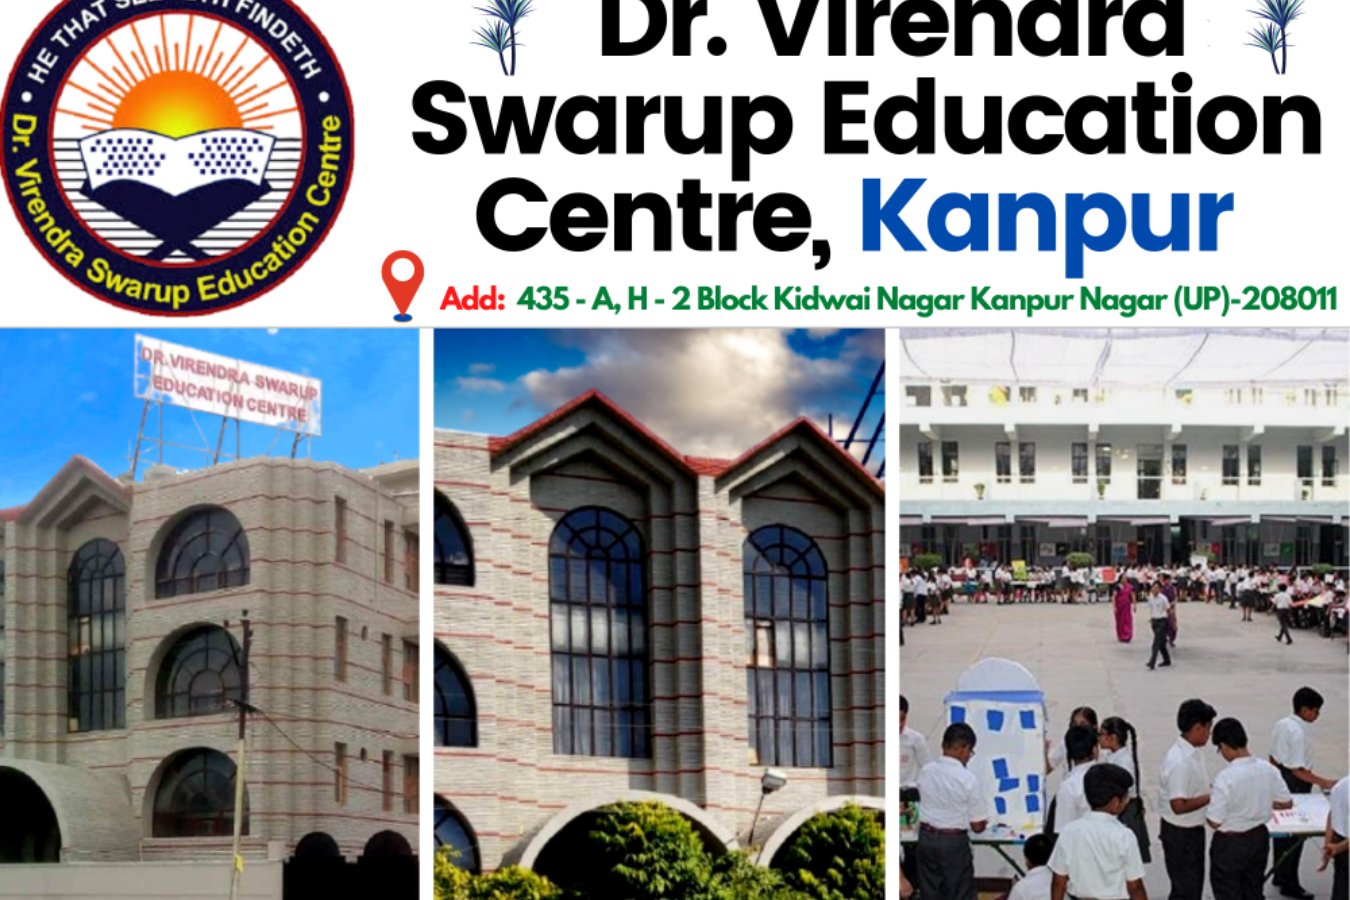 Virenda Swarup Education Centre